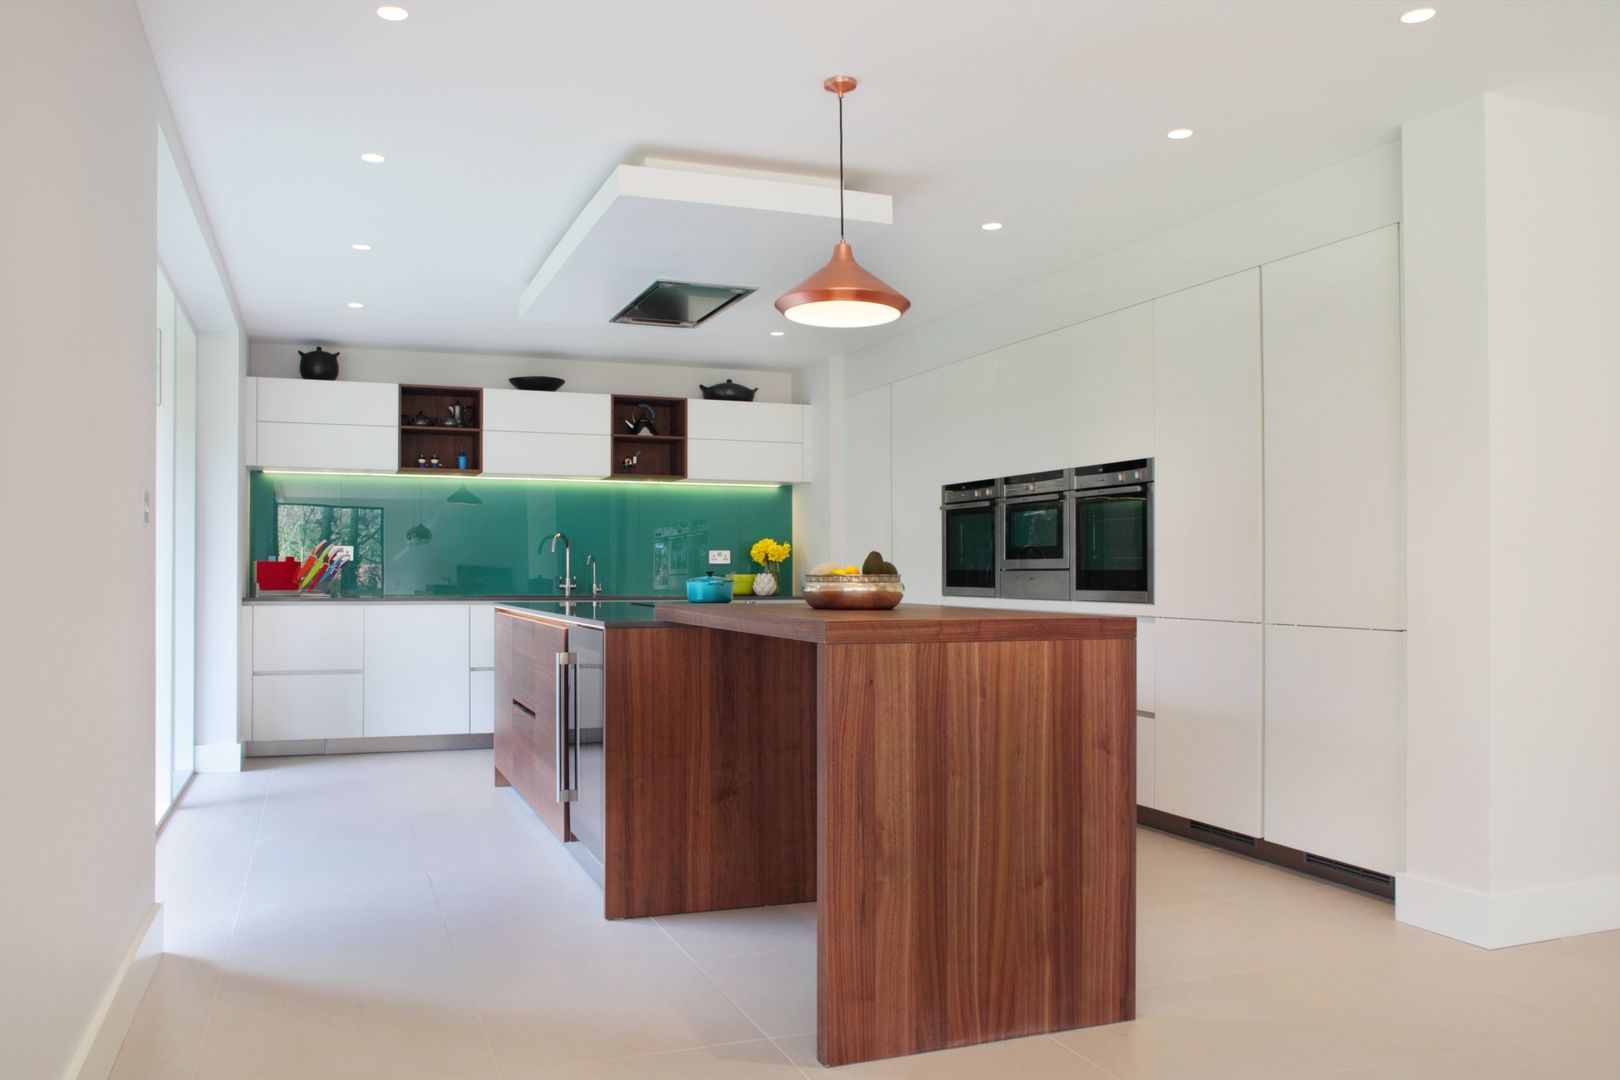 Contemporary Kitchen in Walnut and White Glass in-toto Kitchens Design Studio Marlow Kitchen